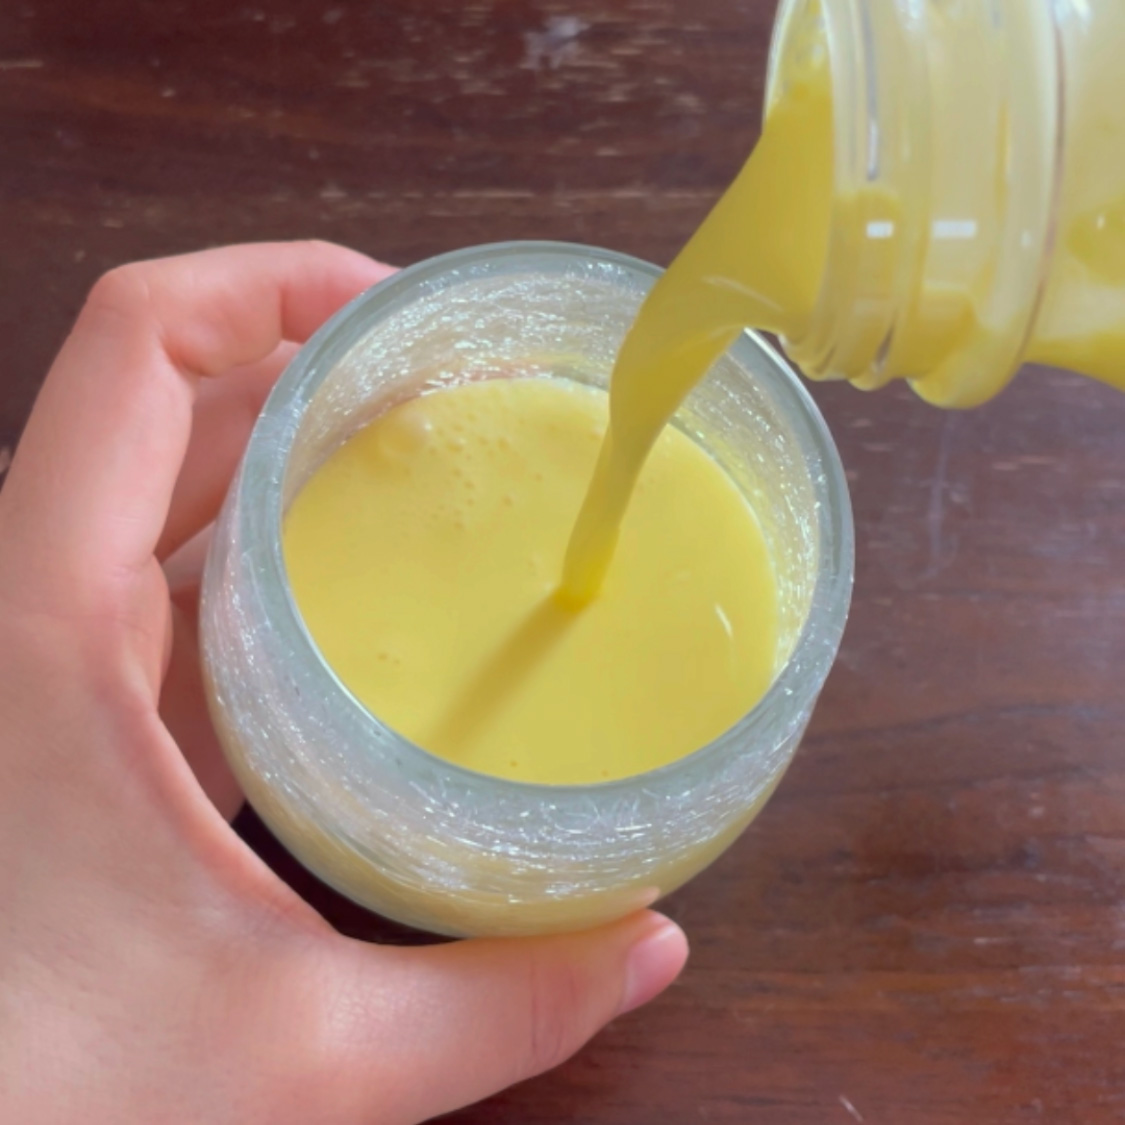 📸 BioGaia Child Health Yogurt Drink

☑︎ L.ロイテリ菌プロテクティス株
☑︎ 苺果汁
☑︎ 広島県産牛乳
☑︎ 低脂肪

こう見えて優しい苺味。甘酸っぱさがミルク感を引き立ててくれてて美味。プロテクティス株は赤ちゃんの夜泣きにもいいらしく、なんて万能な菌😳

tmblr.co/ZVIA7jfiCd2aii…